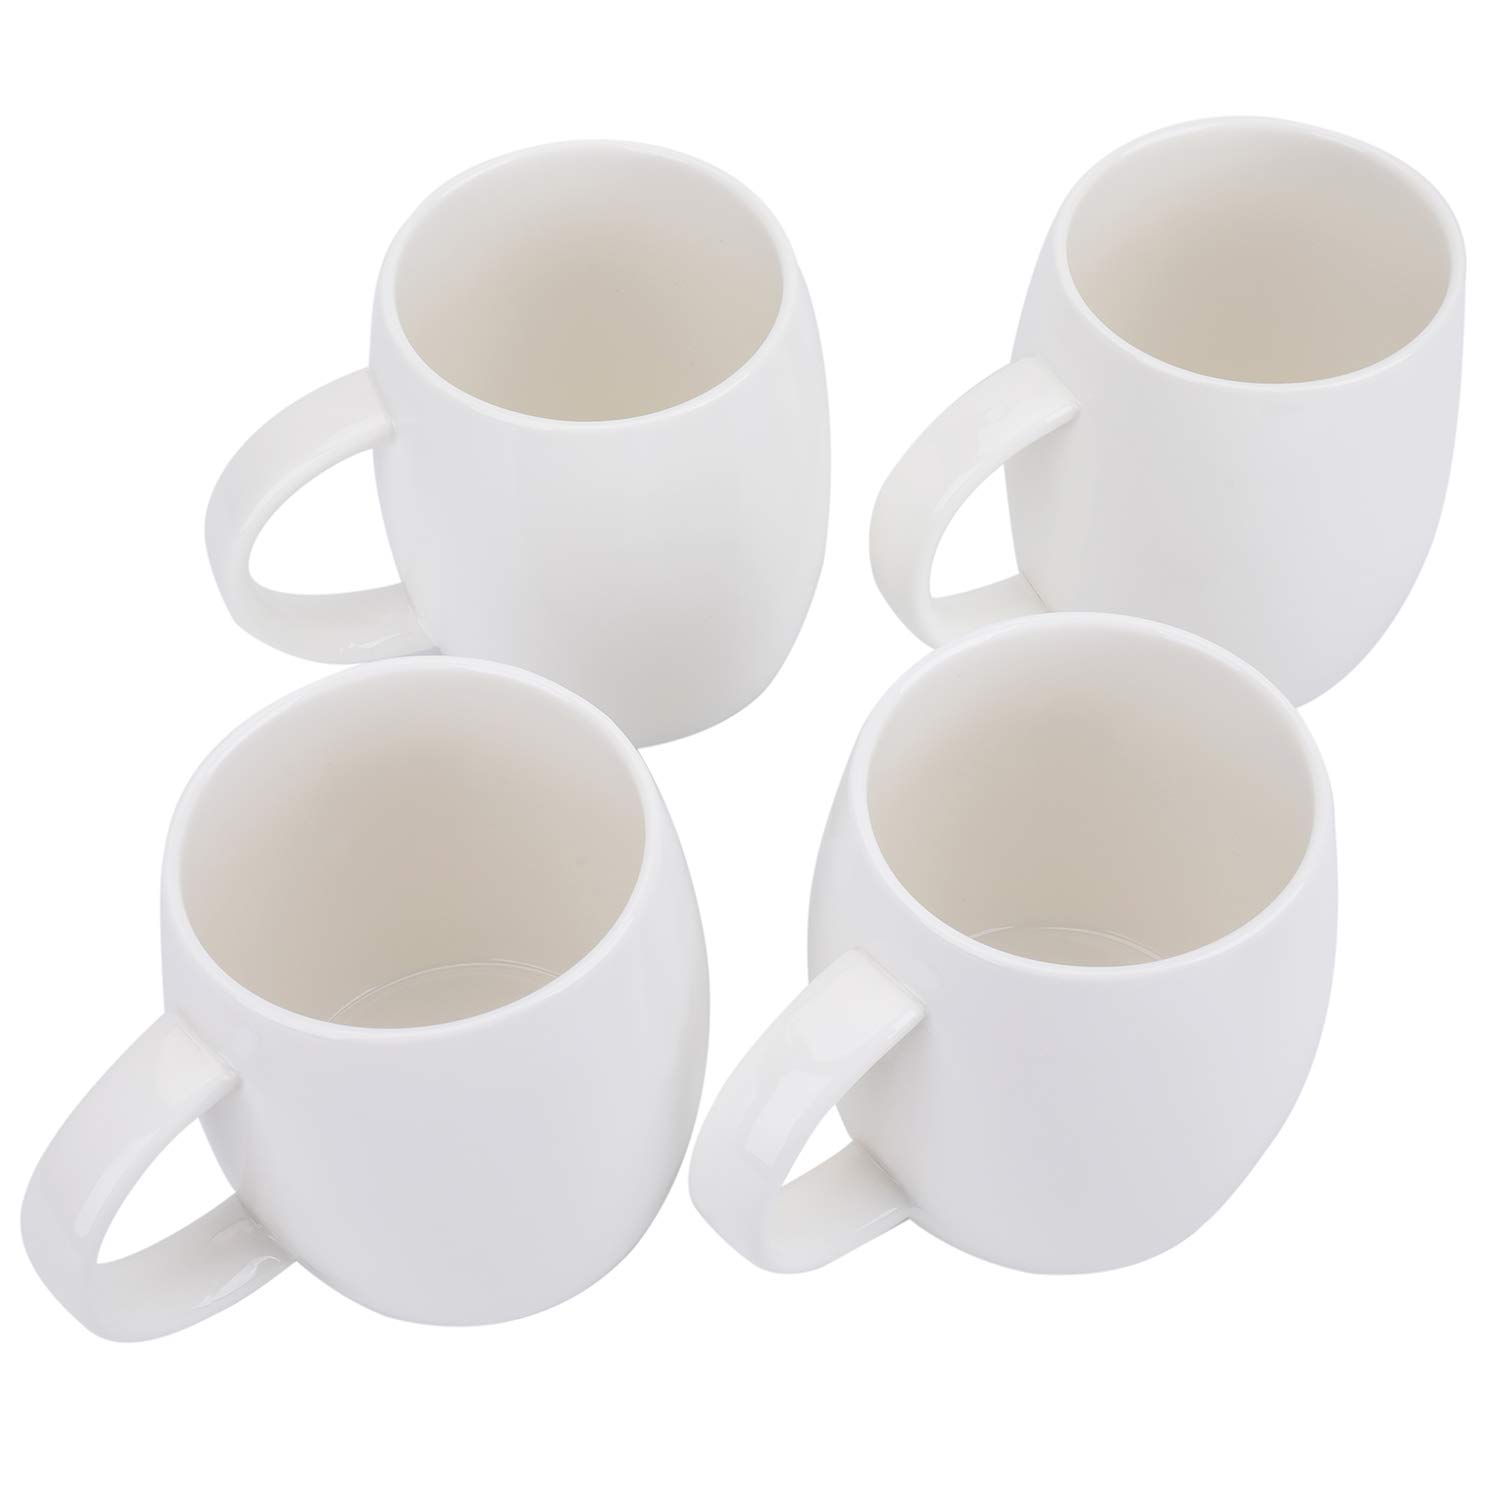 Foraineam Set of 6 Porcelain Mugs 15 Ounces White Coffee Mugs Set Ceramic Drinking Cups for Coffee, Tea, Juice, Cocoa